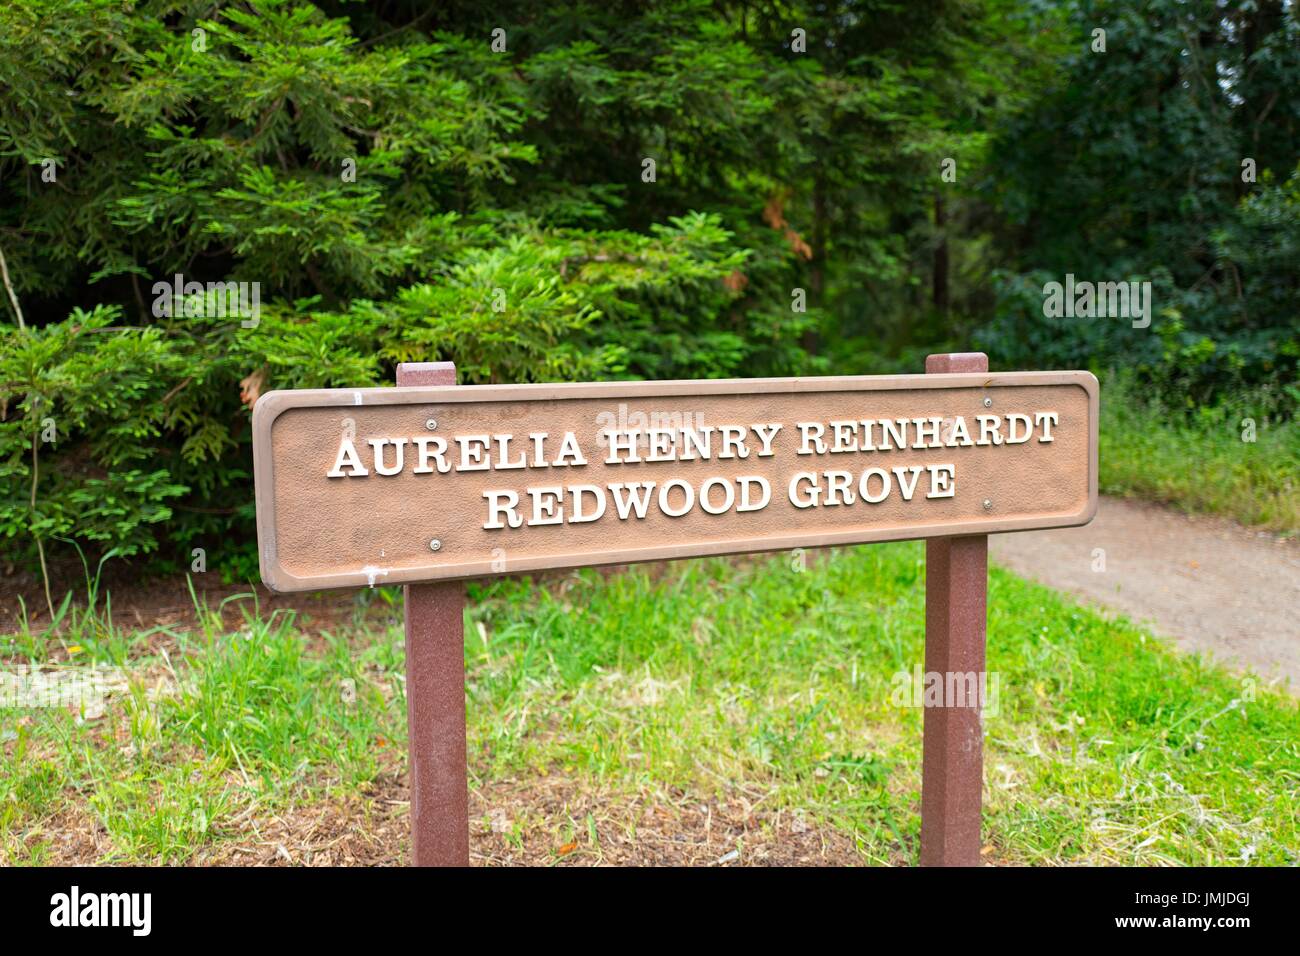 Señalización para Aurelia Henry Reinhardt Redwood Grove en Redwoods Parque Regional, Oakland, California, 26 de mayo de 2017. Foto de stock